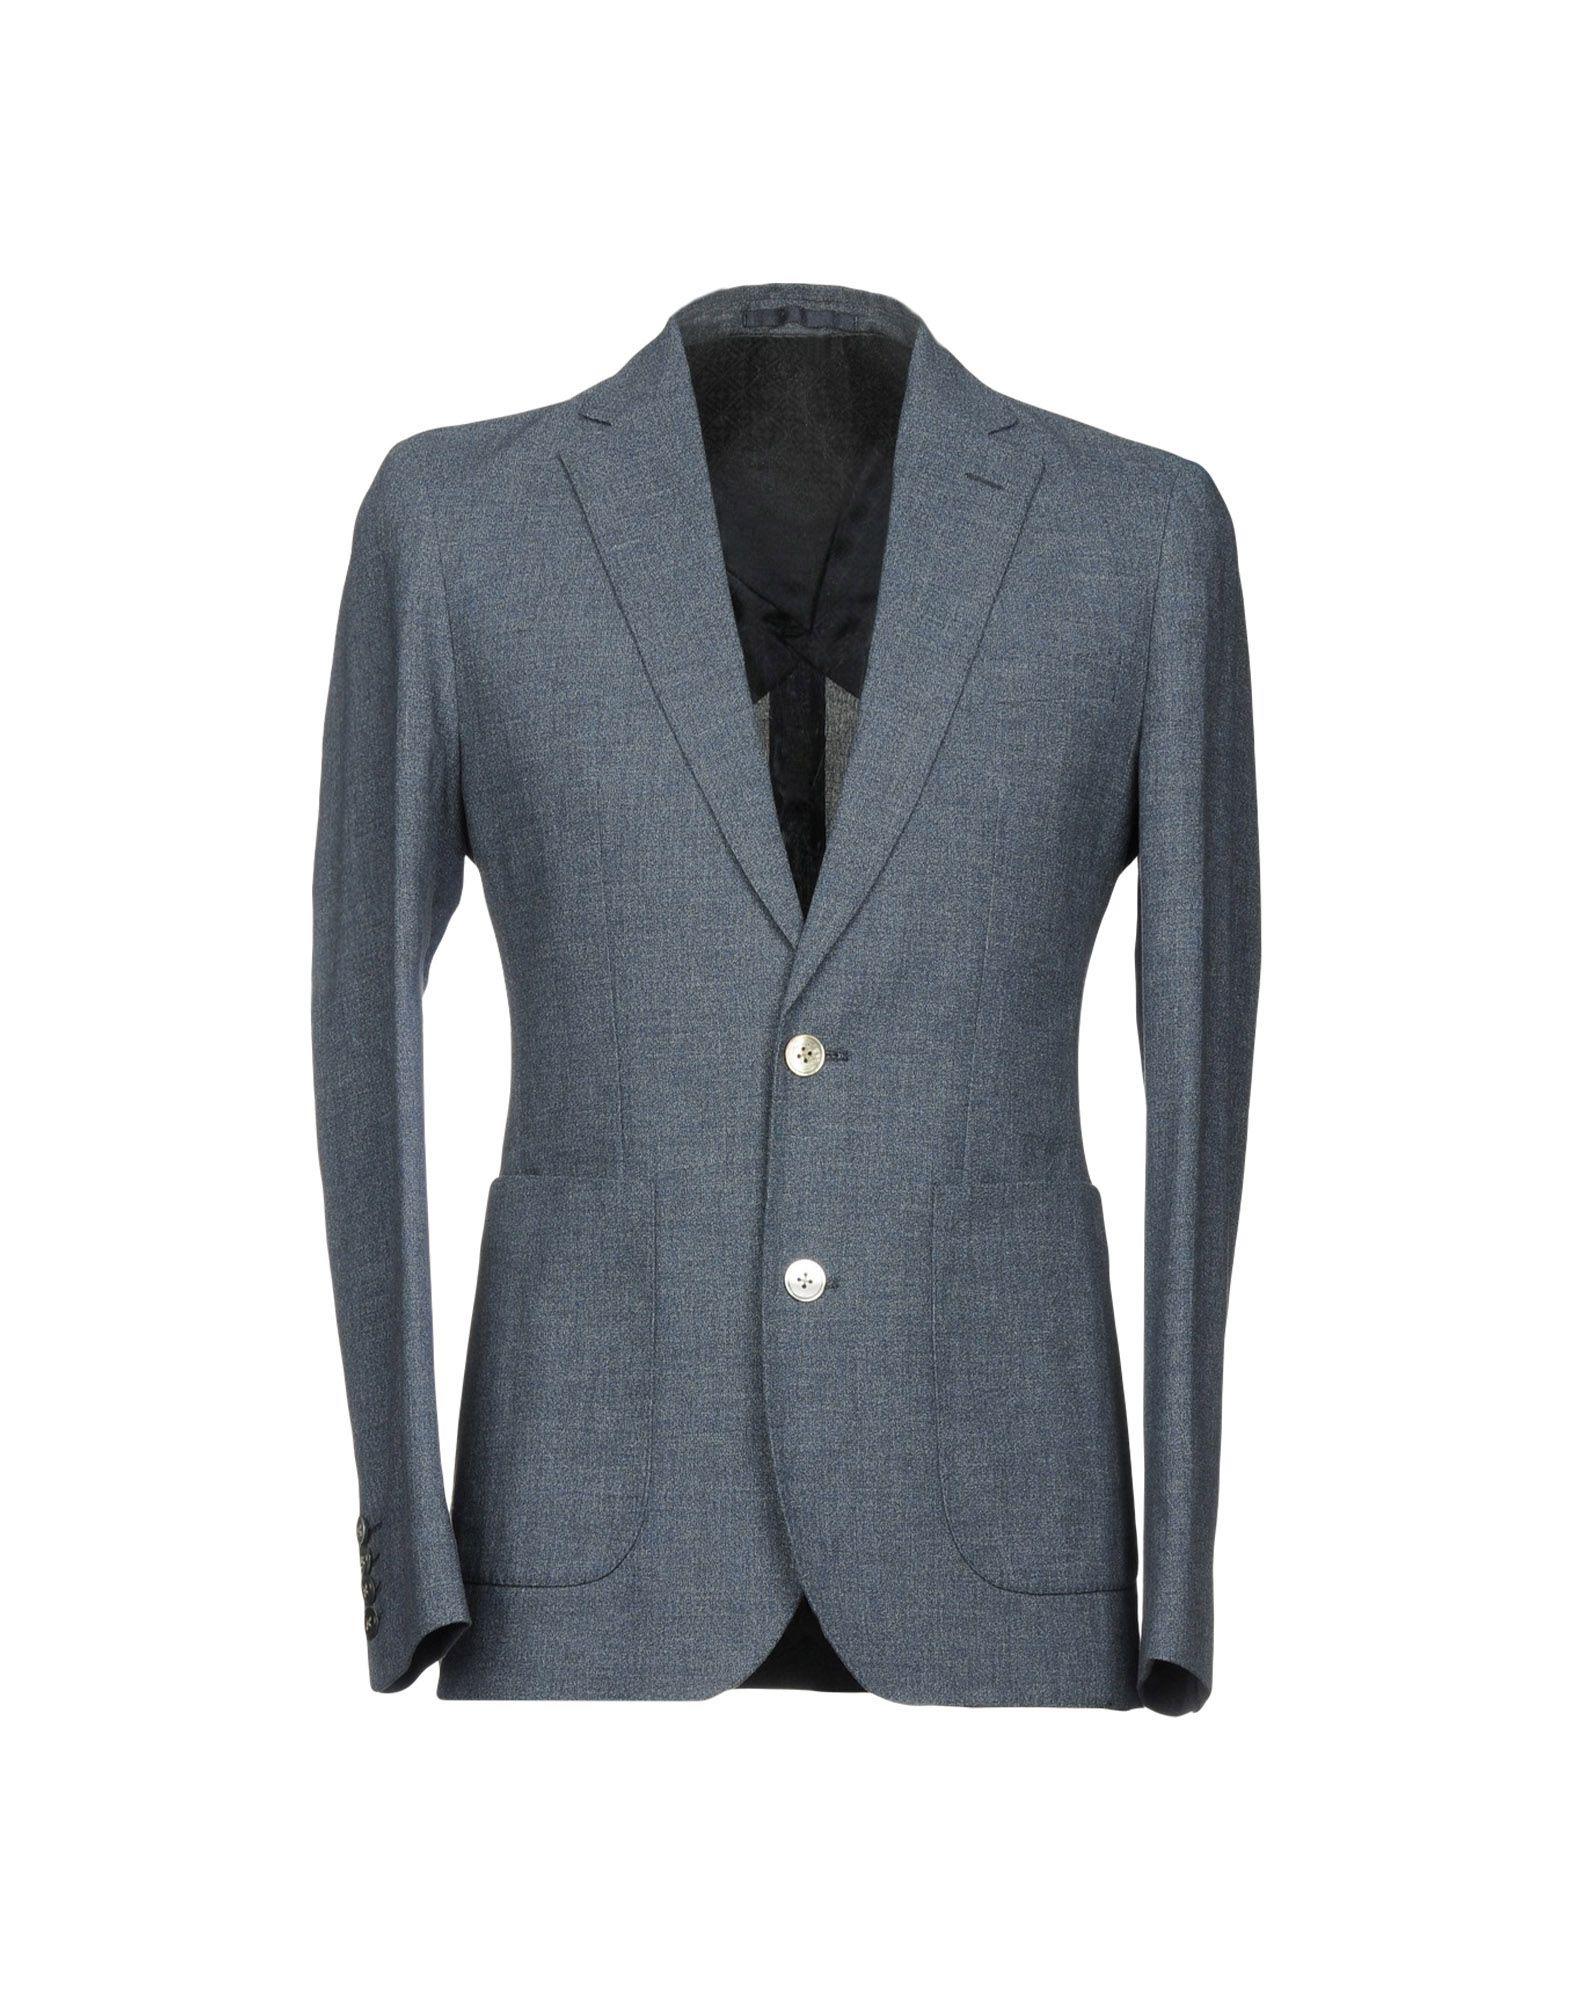 Hardy Amies Cotton Suit Jacket in Dark Blue (Blue) for Men - Lyst